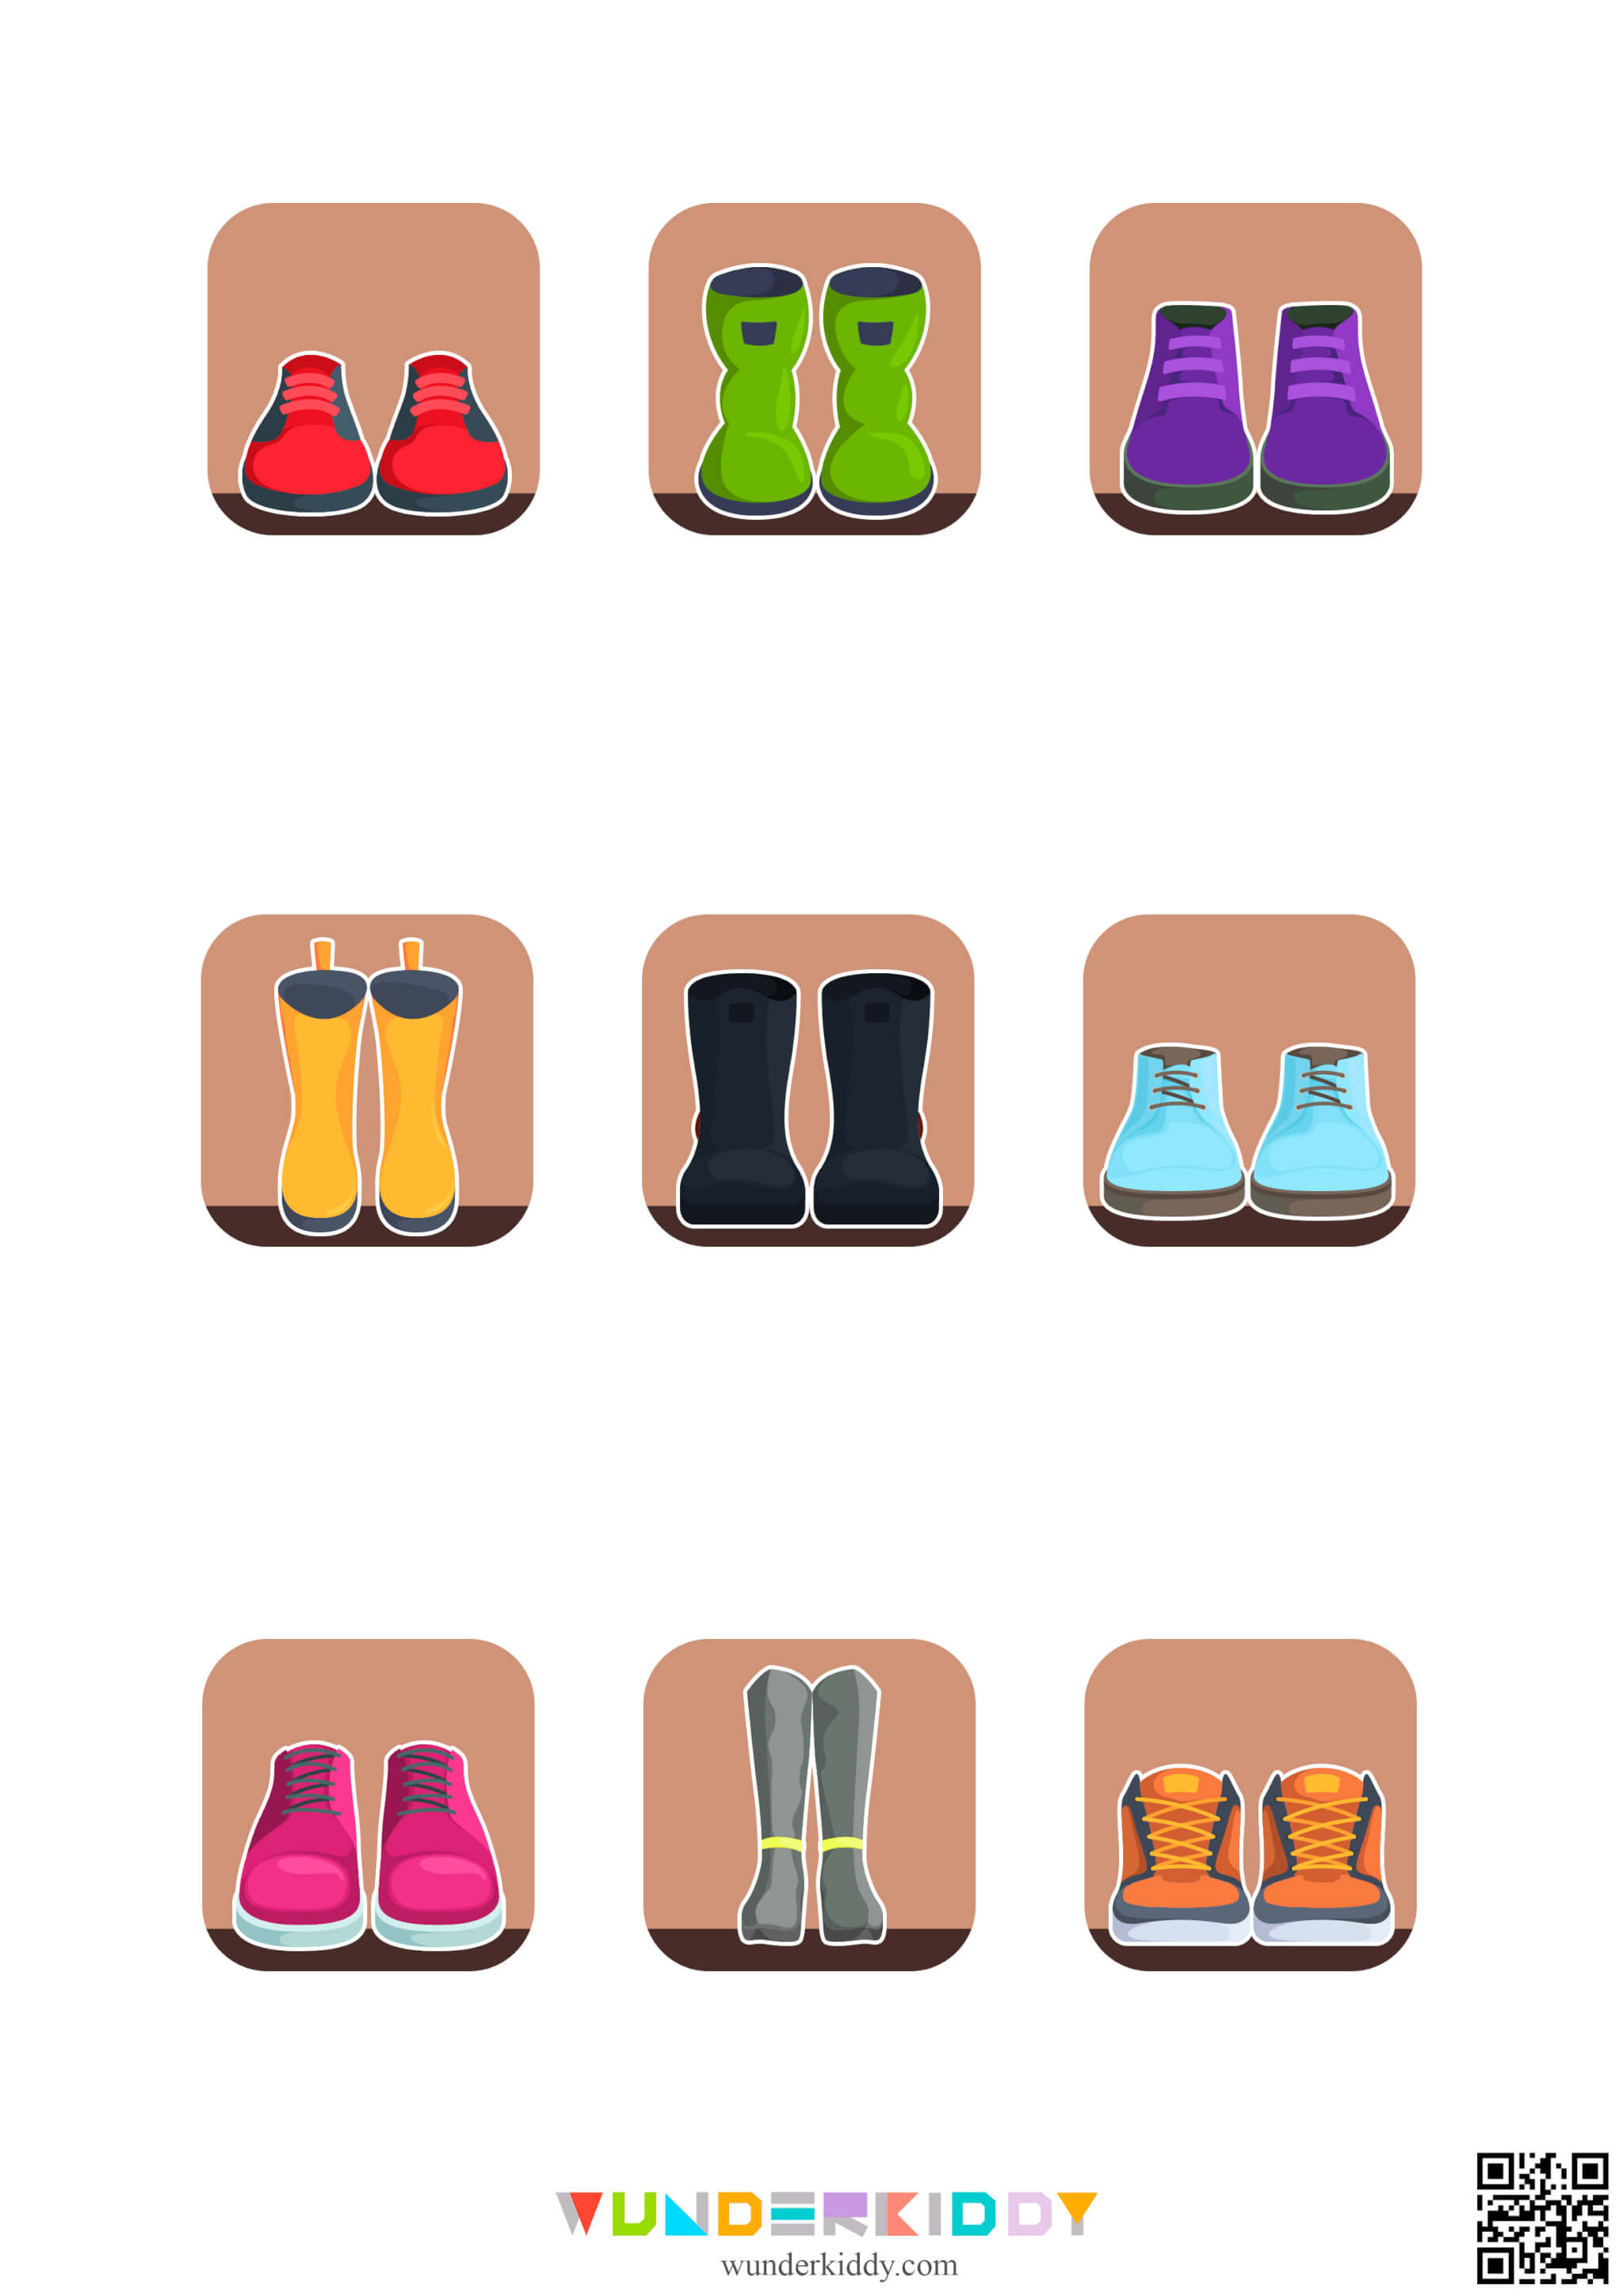 Shoes Colour Matching Activity - Image 3